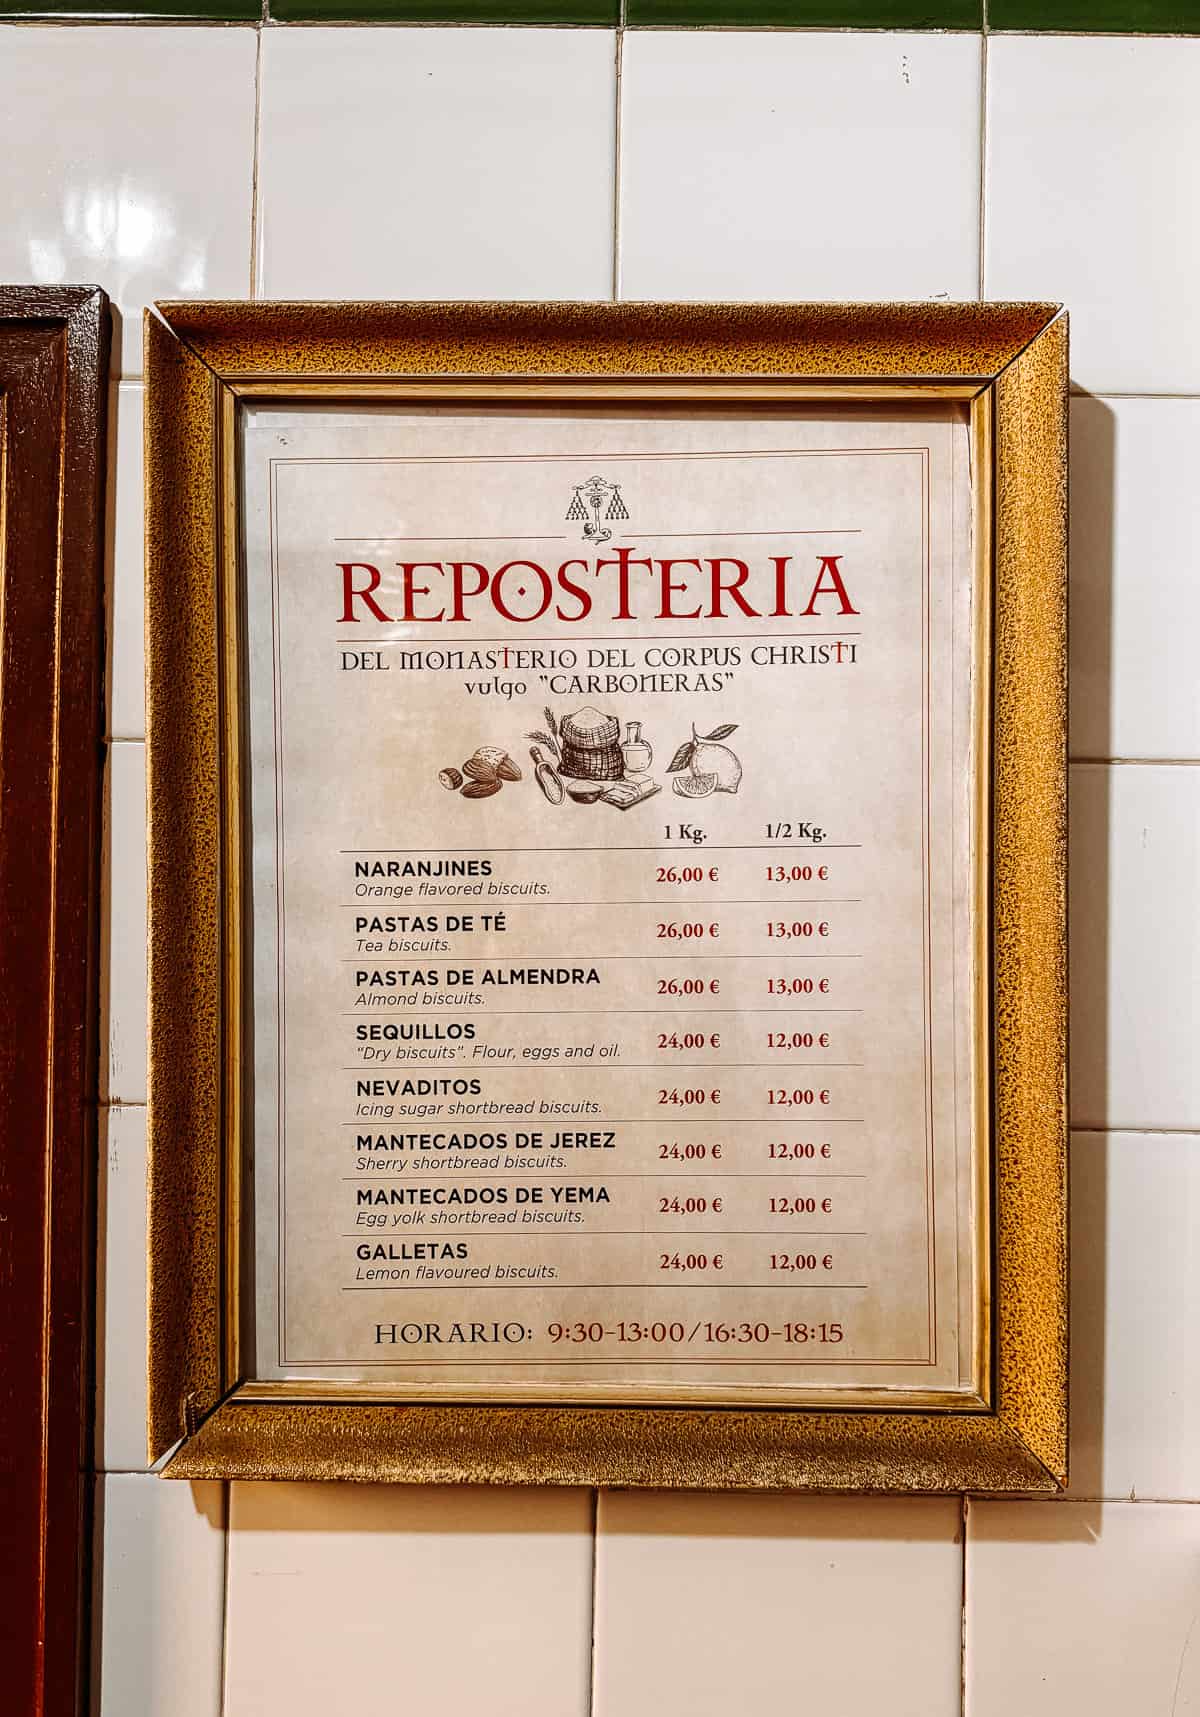 Framed price list on a tiled wall for 'REPOSTERIA DEL MONASTERIO DEL CORPUS CHRISTI vulgo 